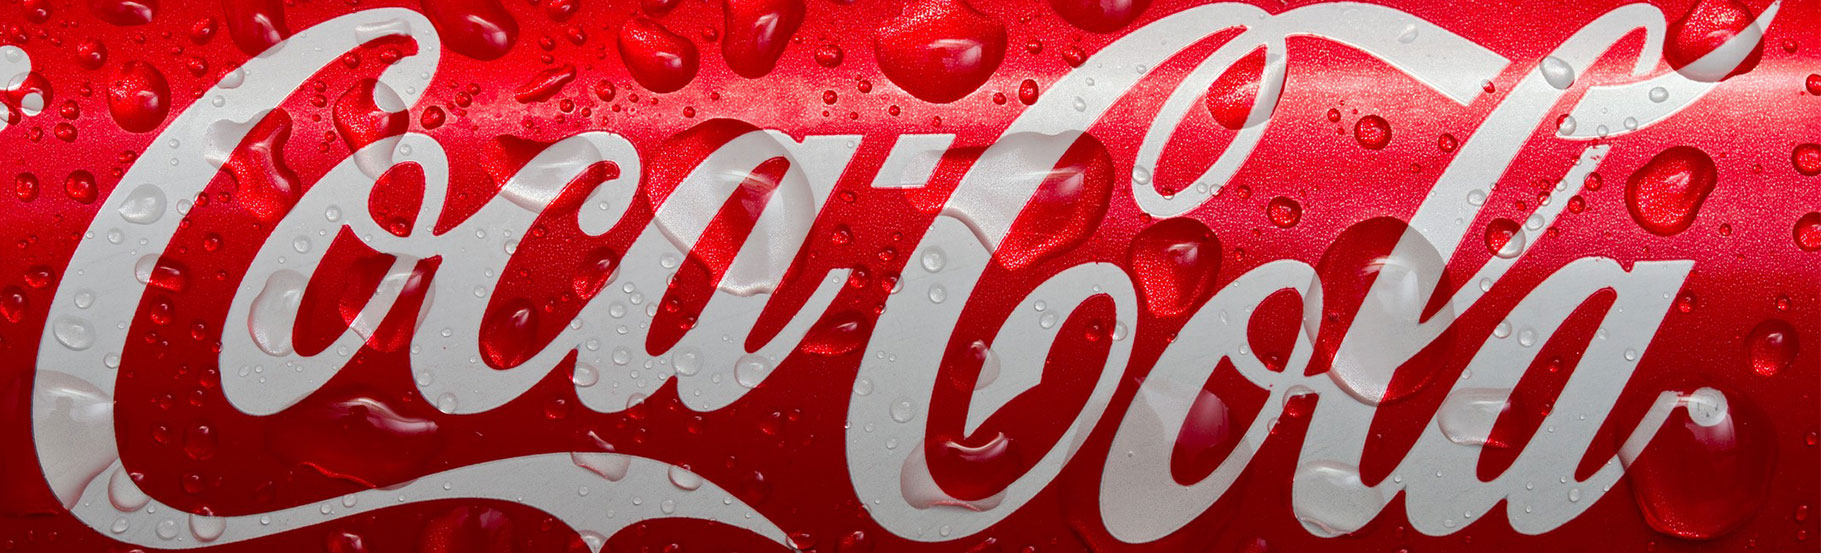 Coca- cola logo